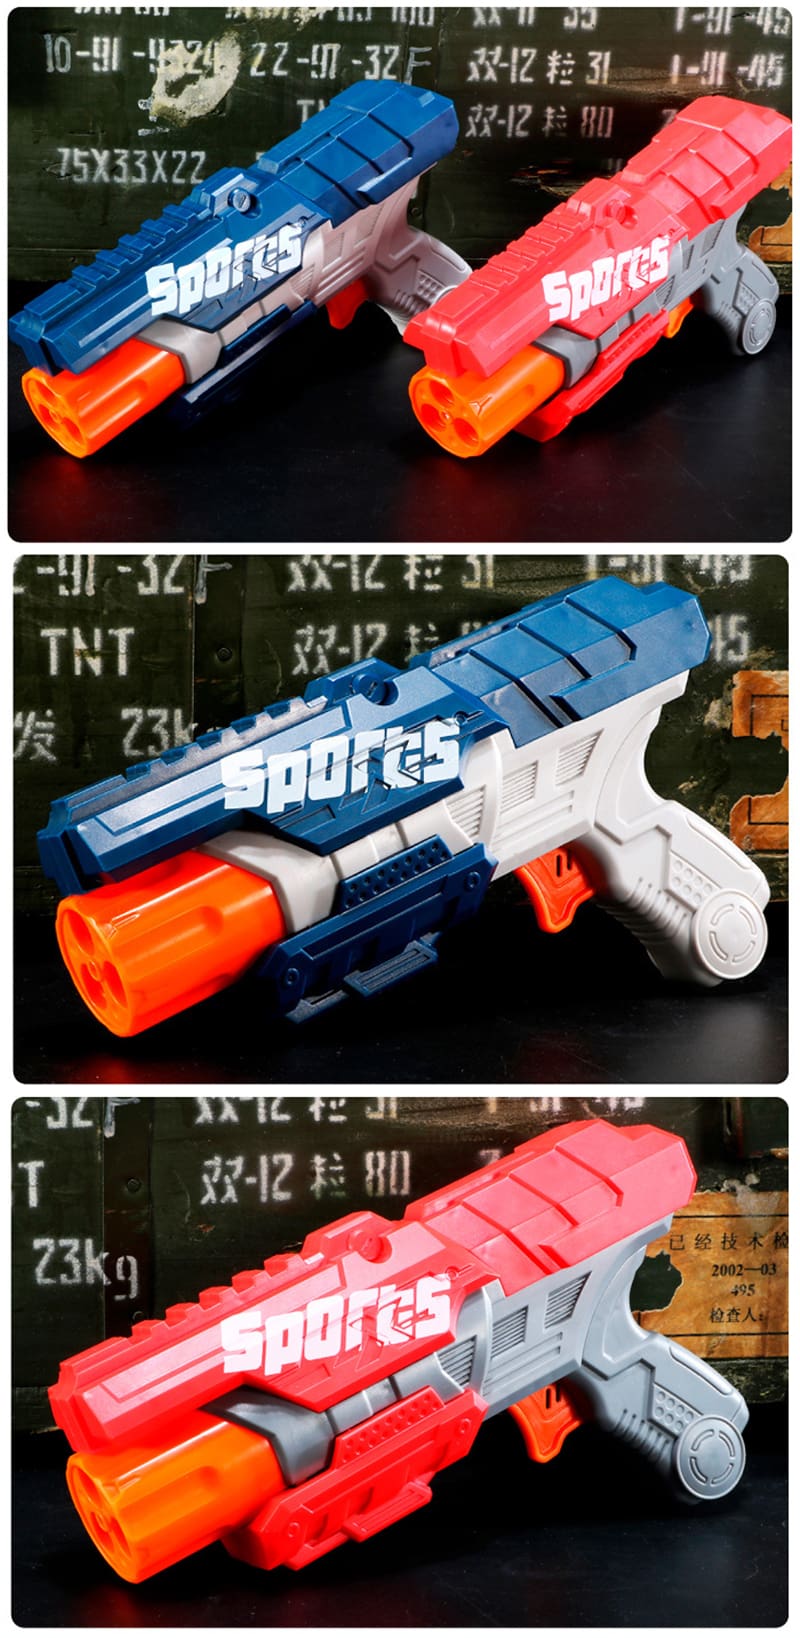 Safety Eva Soft Bullets Guns Toy for Kids